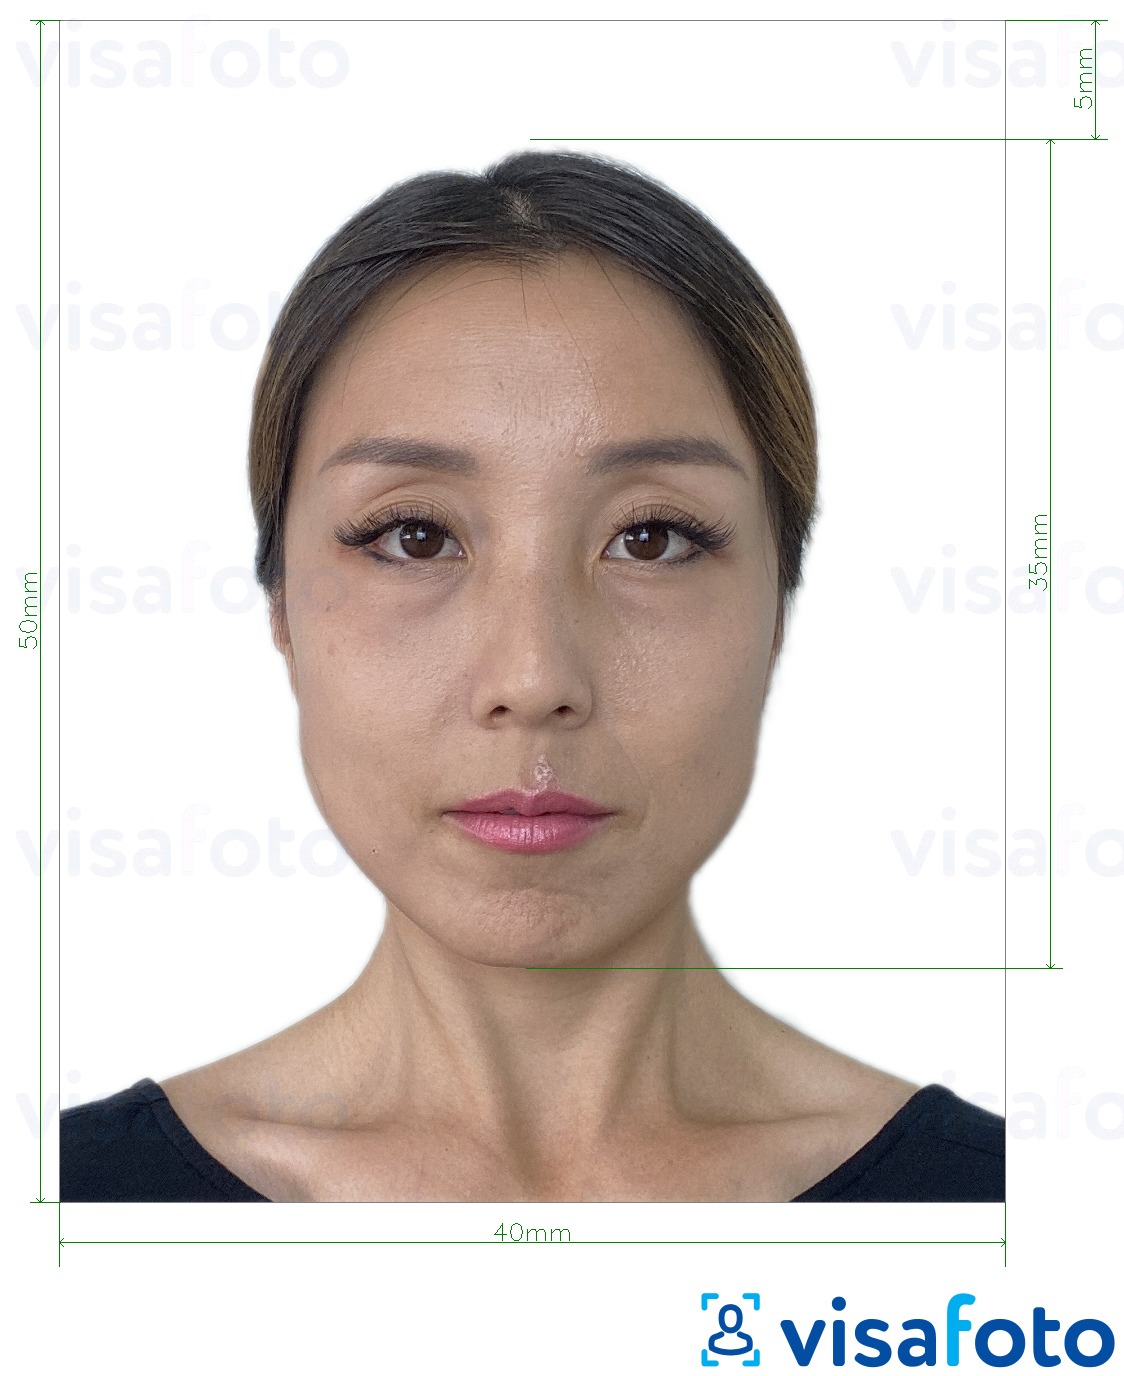 Contoh foto untuk Pasport Hong Kong 40x50 mm (4x5 cm) dengan spesifikasi saiz yang tepat.